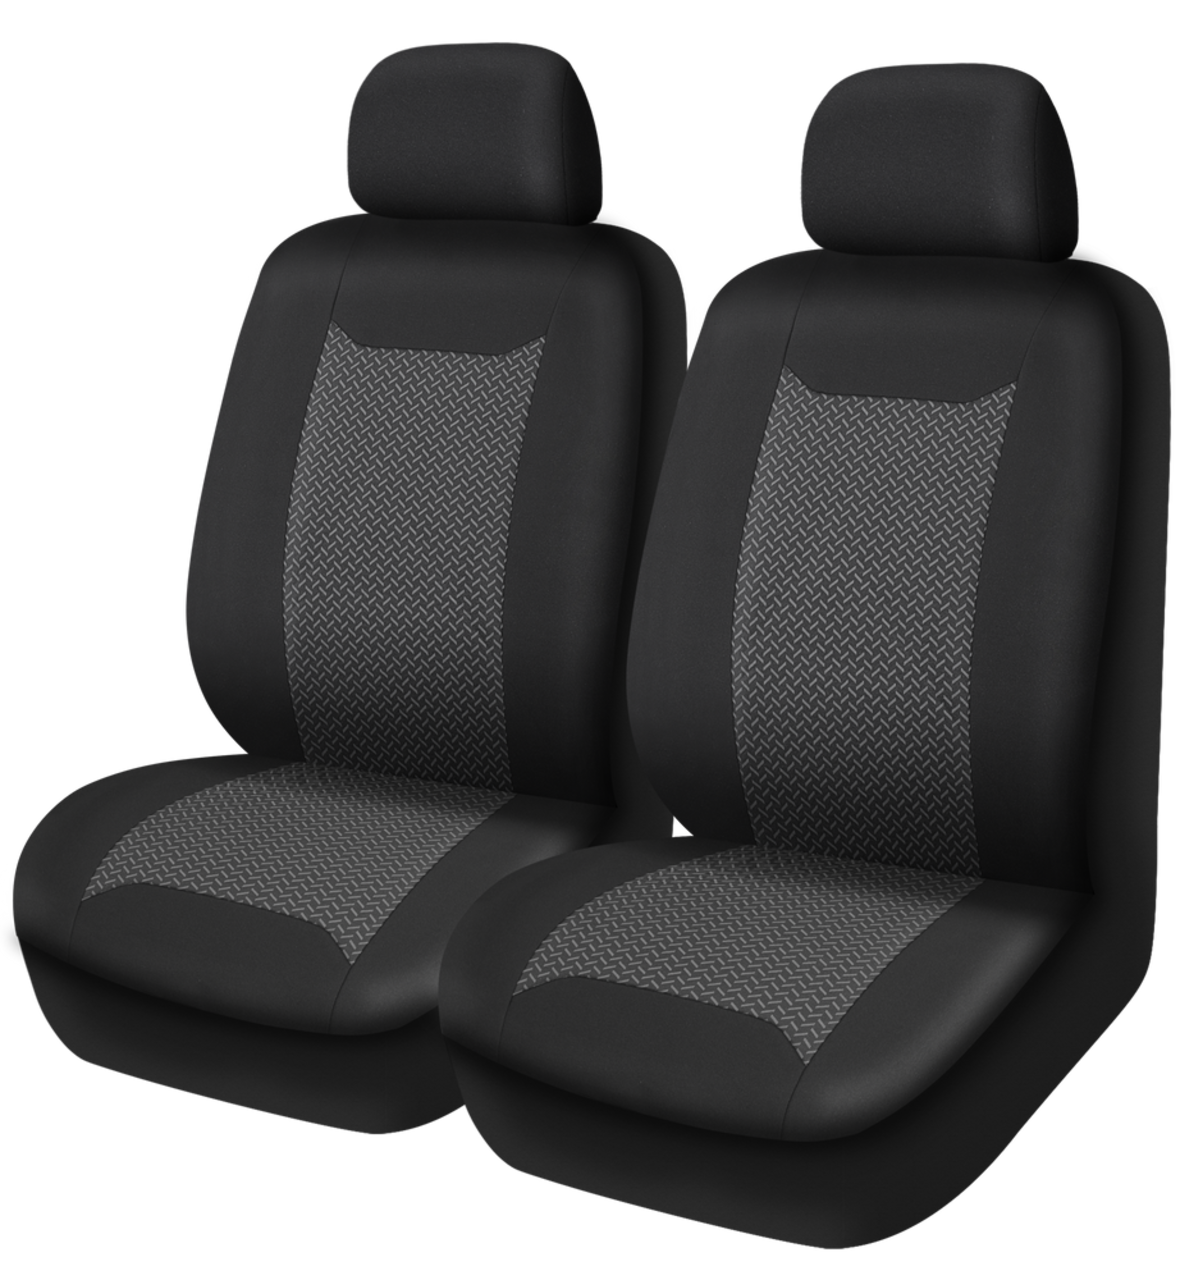 AutoTrends Track Car Seat Cover, Black & Grey, 2-pk